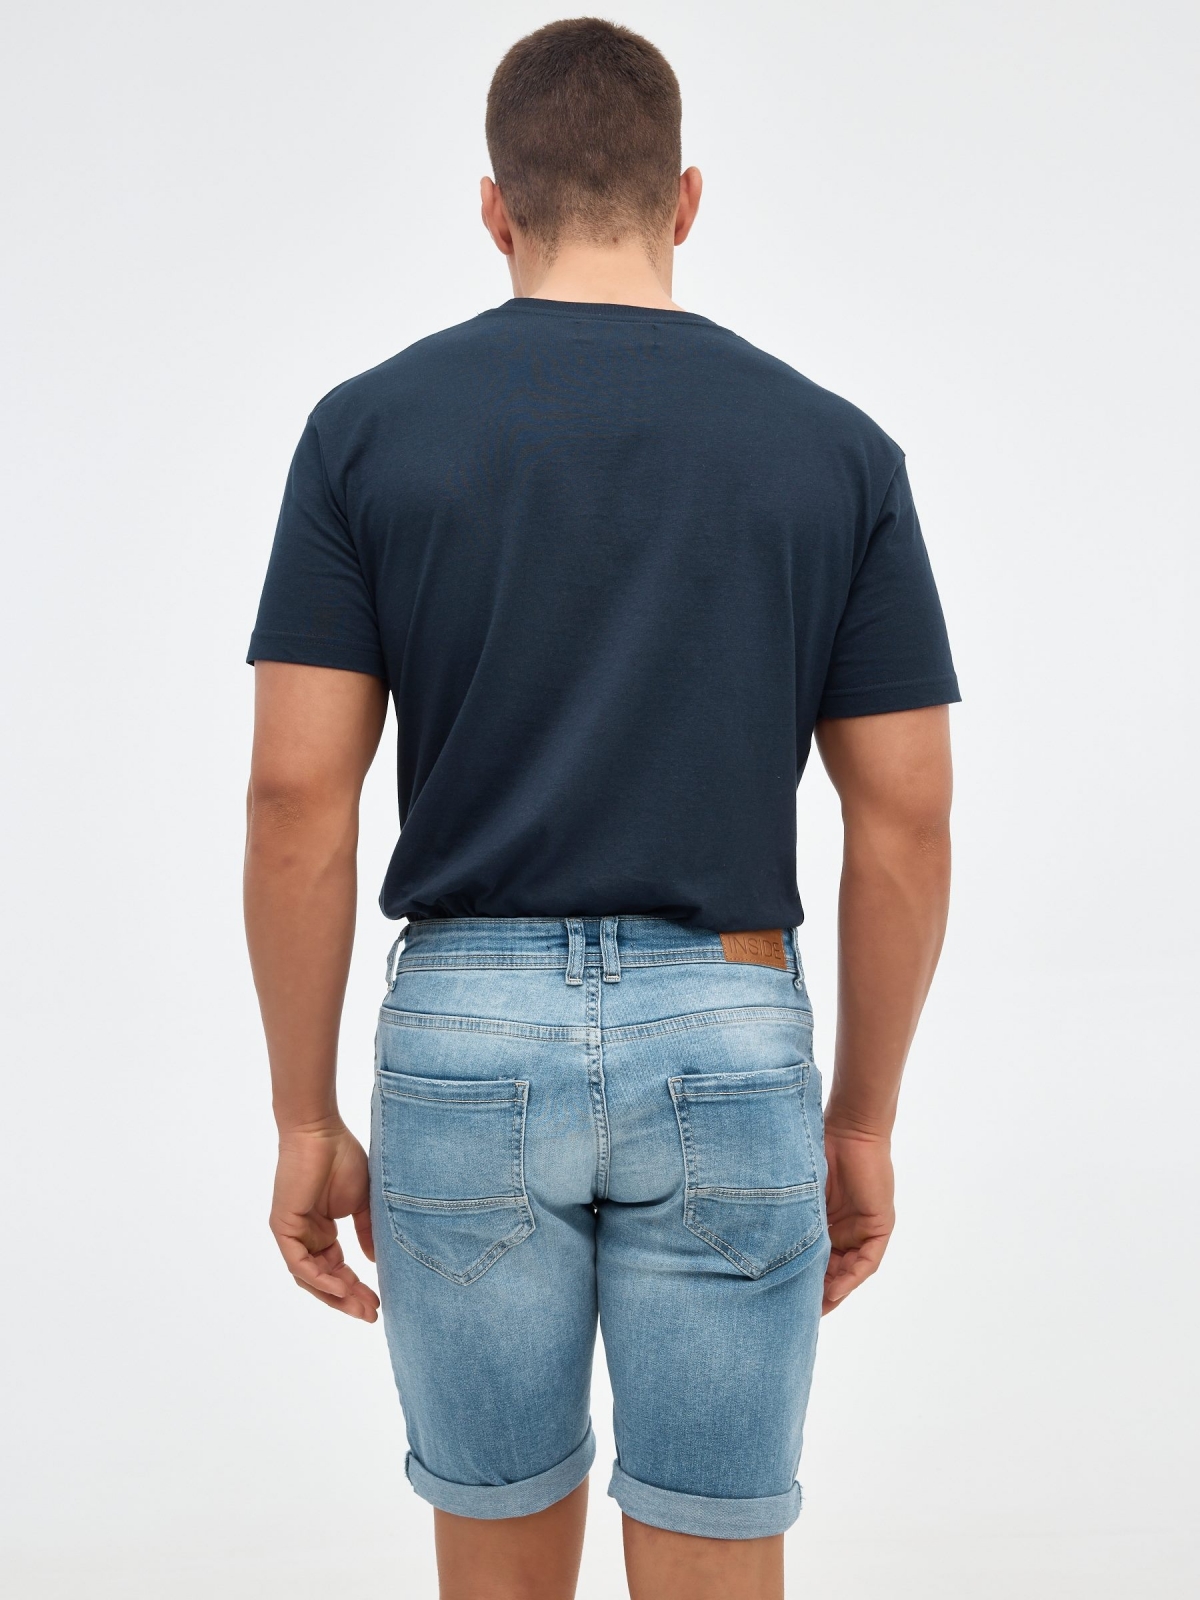 Slim bermuda shorts washed denim blue middle back view